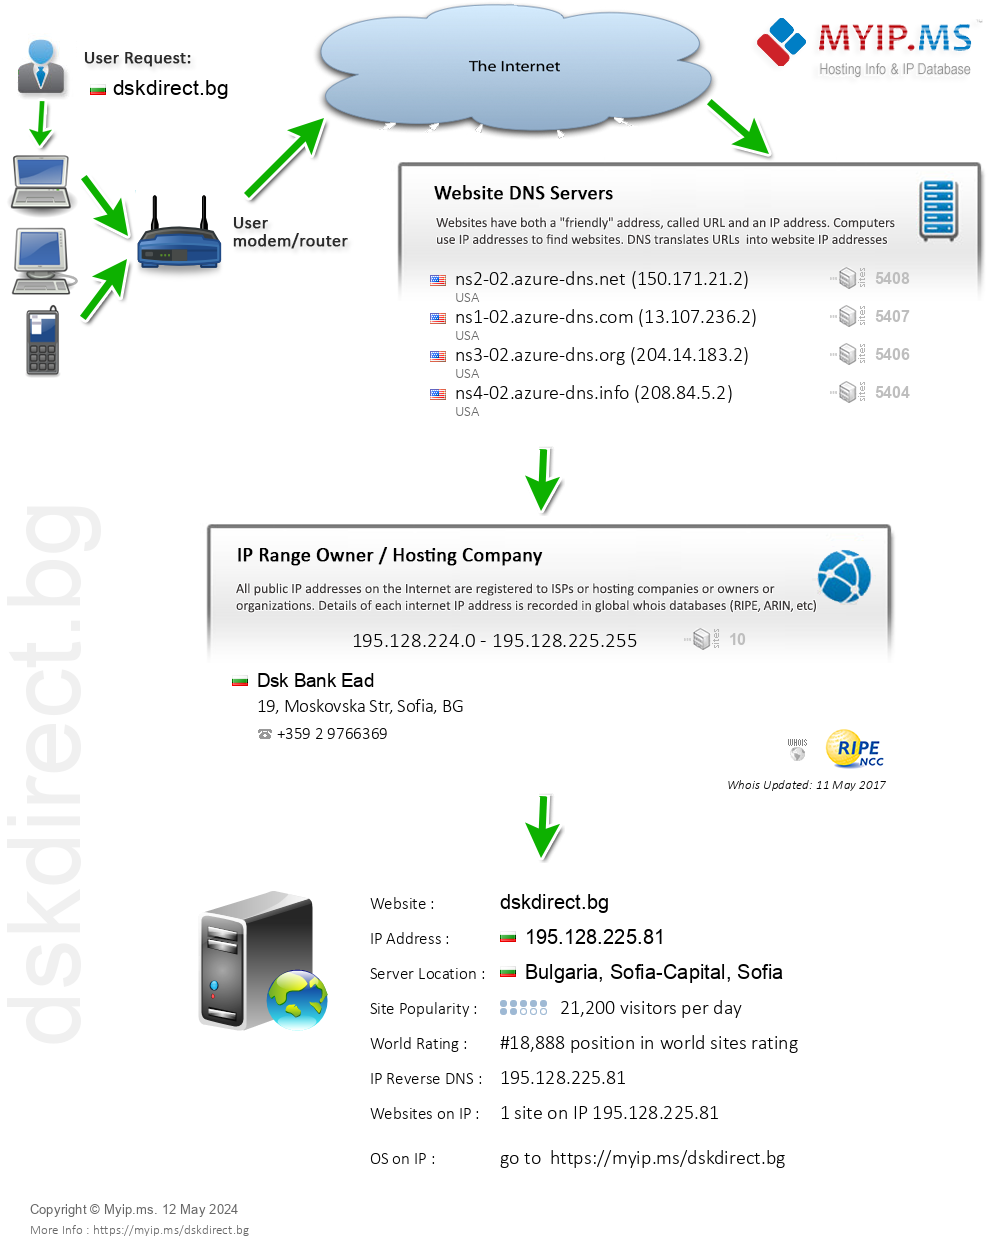 Dskdirect.bg - Website Hosting Visual IP Diagram